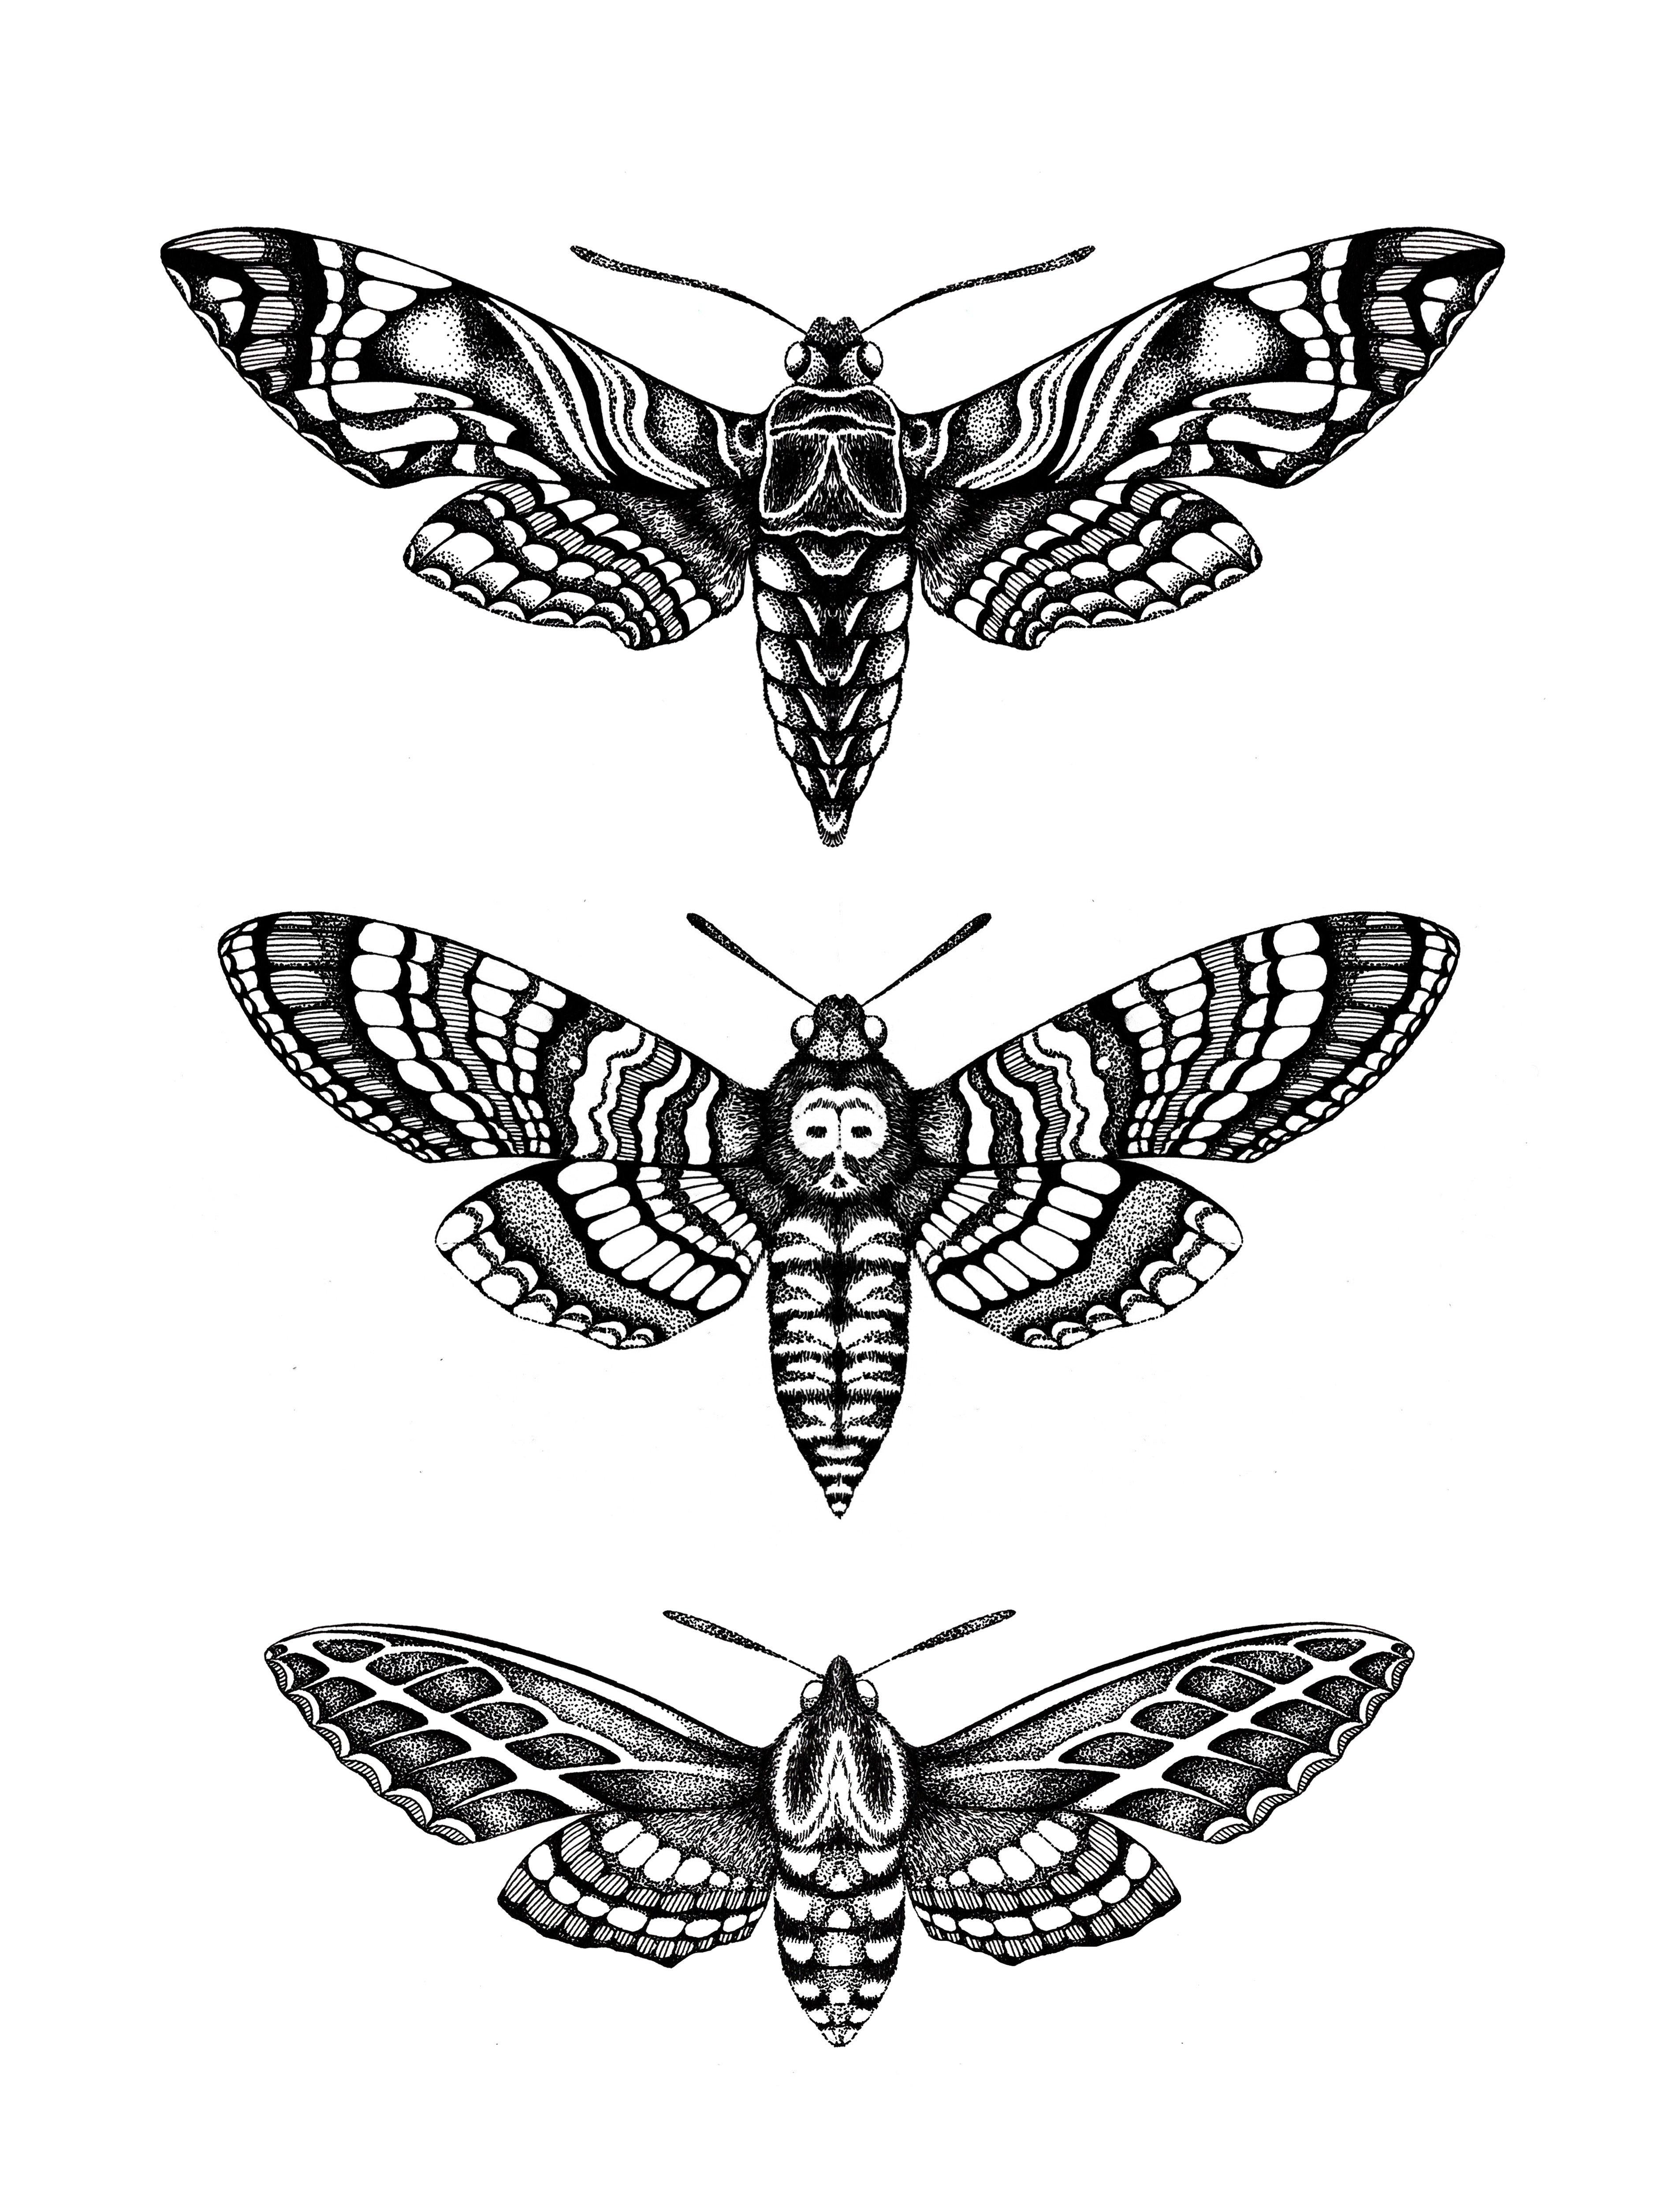 'Hawk Moths' Fine Art Print - Emily Carter London